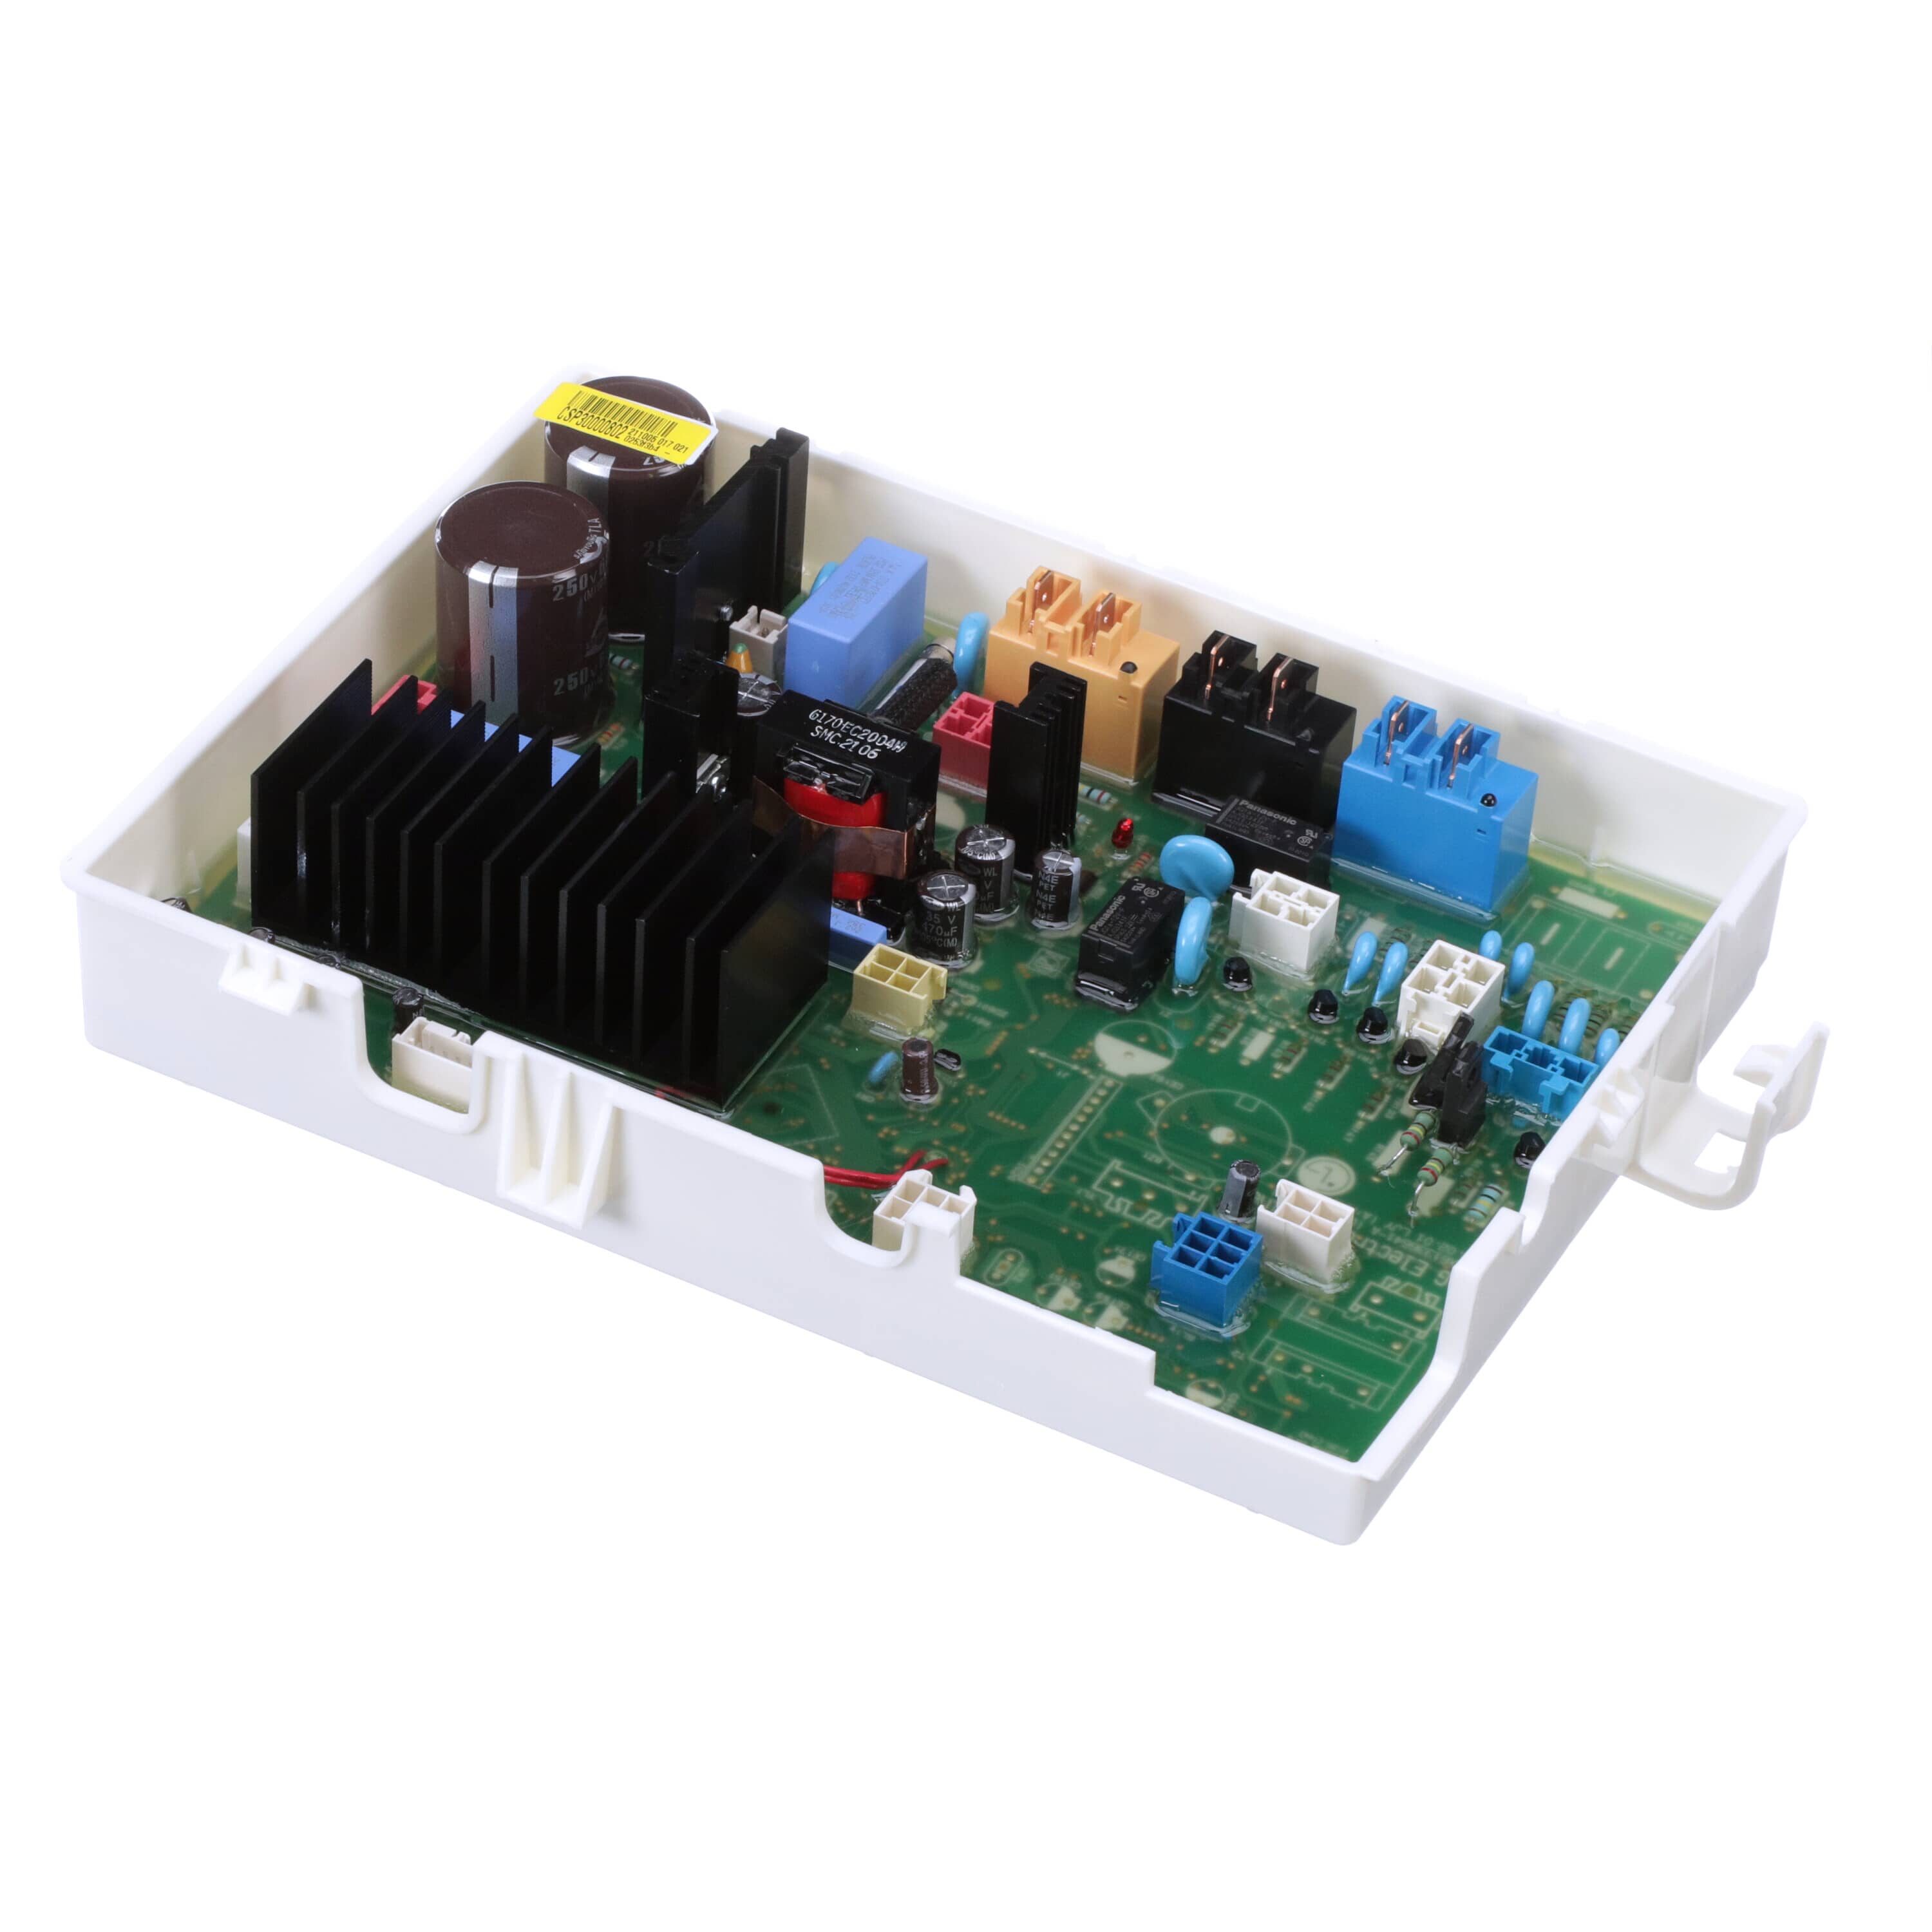 LG CSP30000802 Washer Electronic Control Board